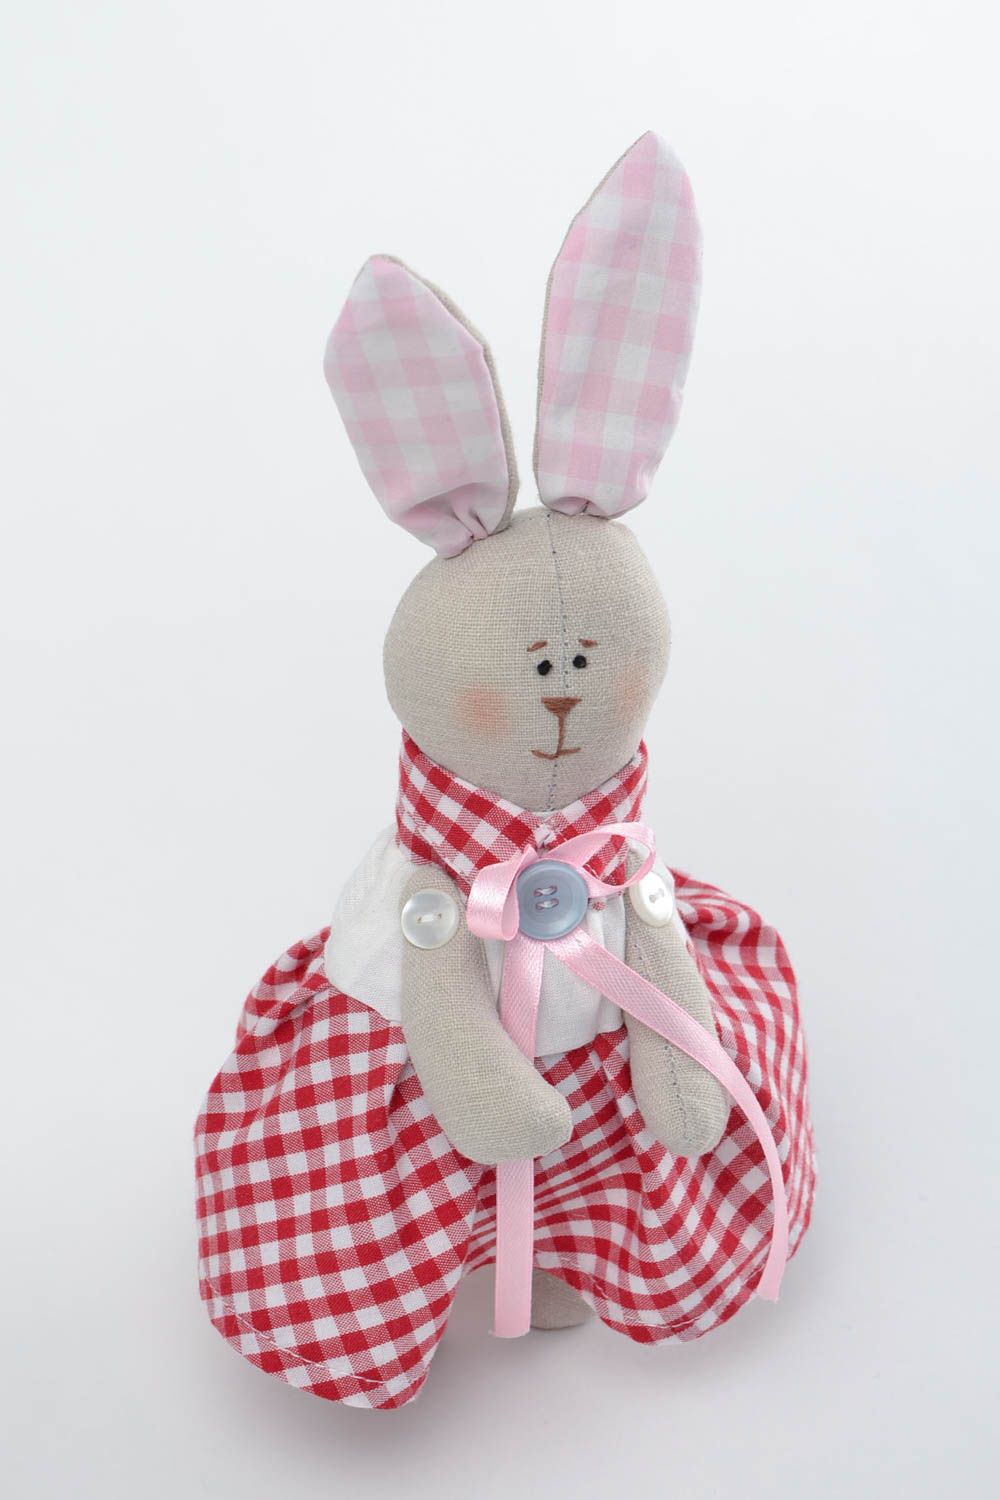 Stuffed toy rabbit toy homemade crafts handmade toys nursery decor kids gifts photo 4